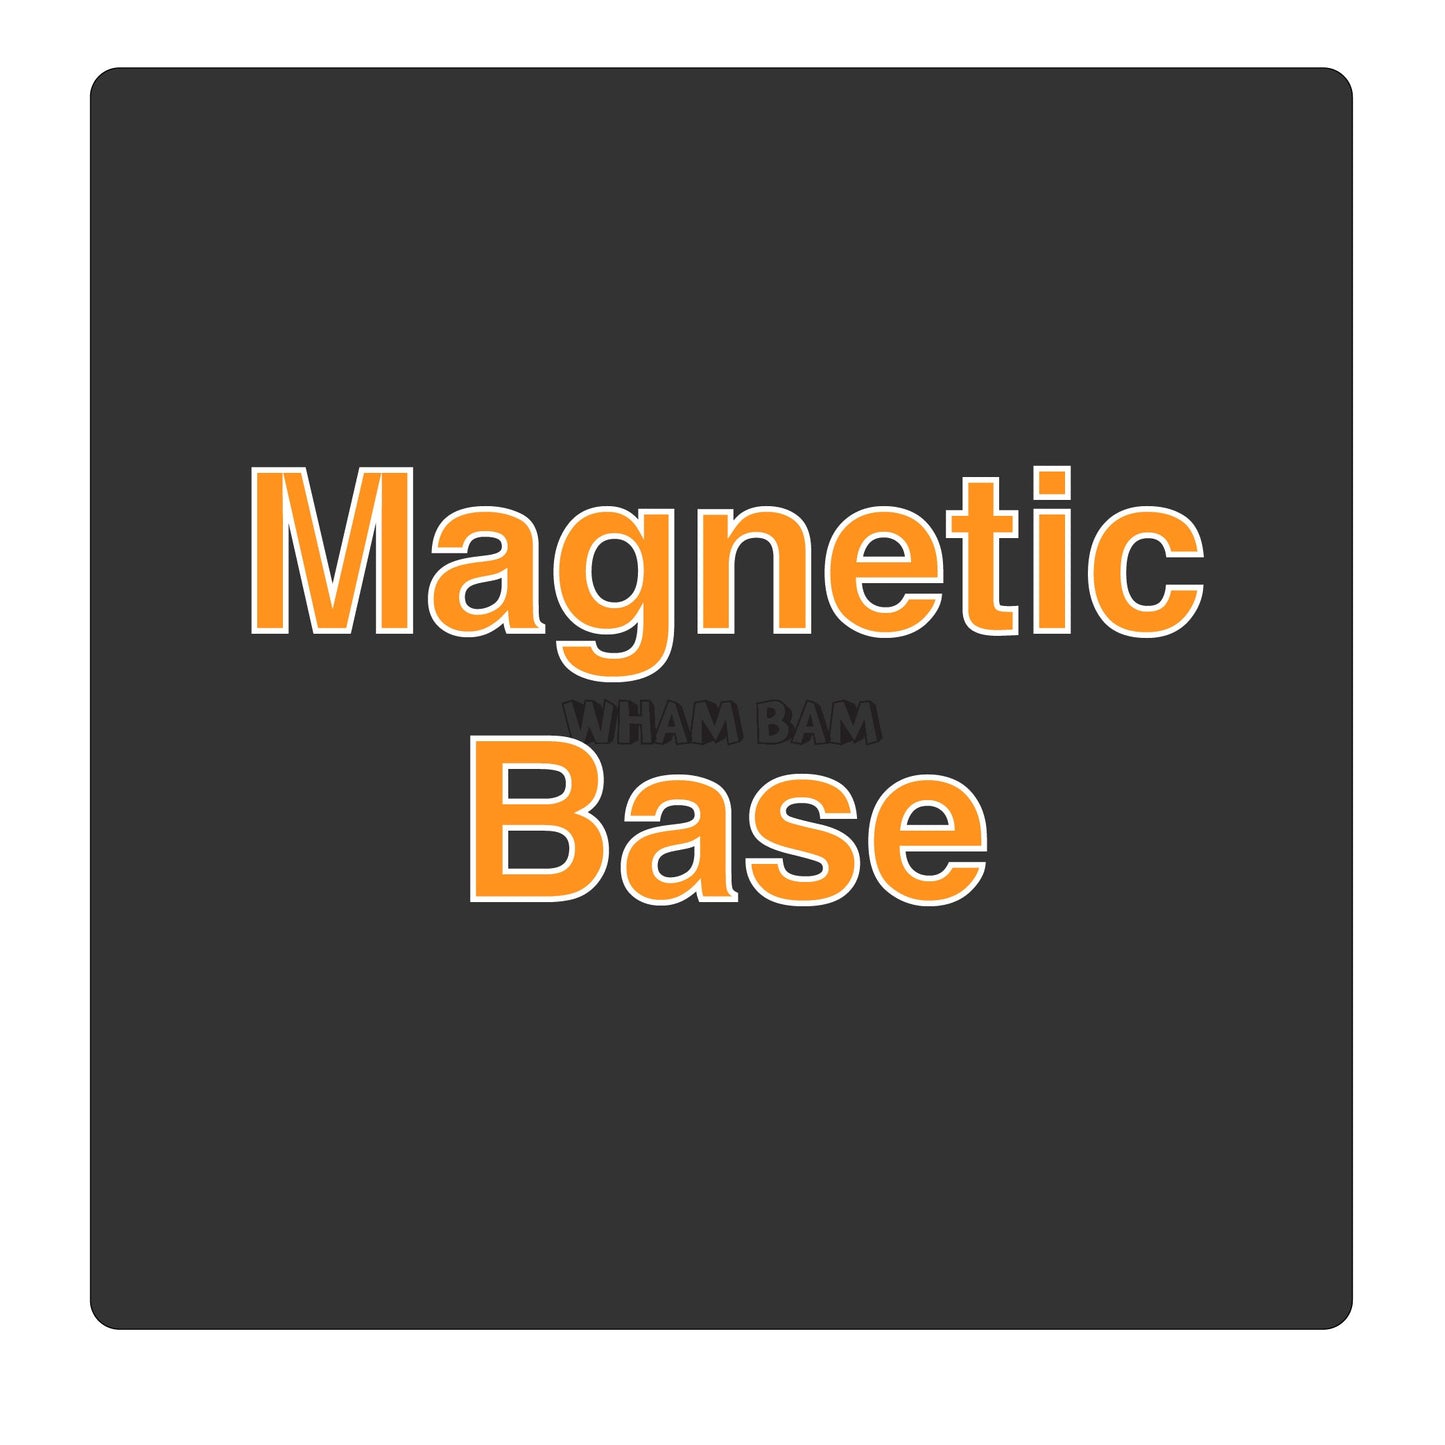 Magnetic Base - 377 x 370 - Creality Ender 5 Plus